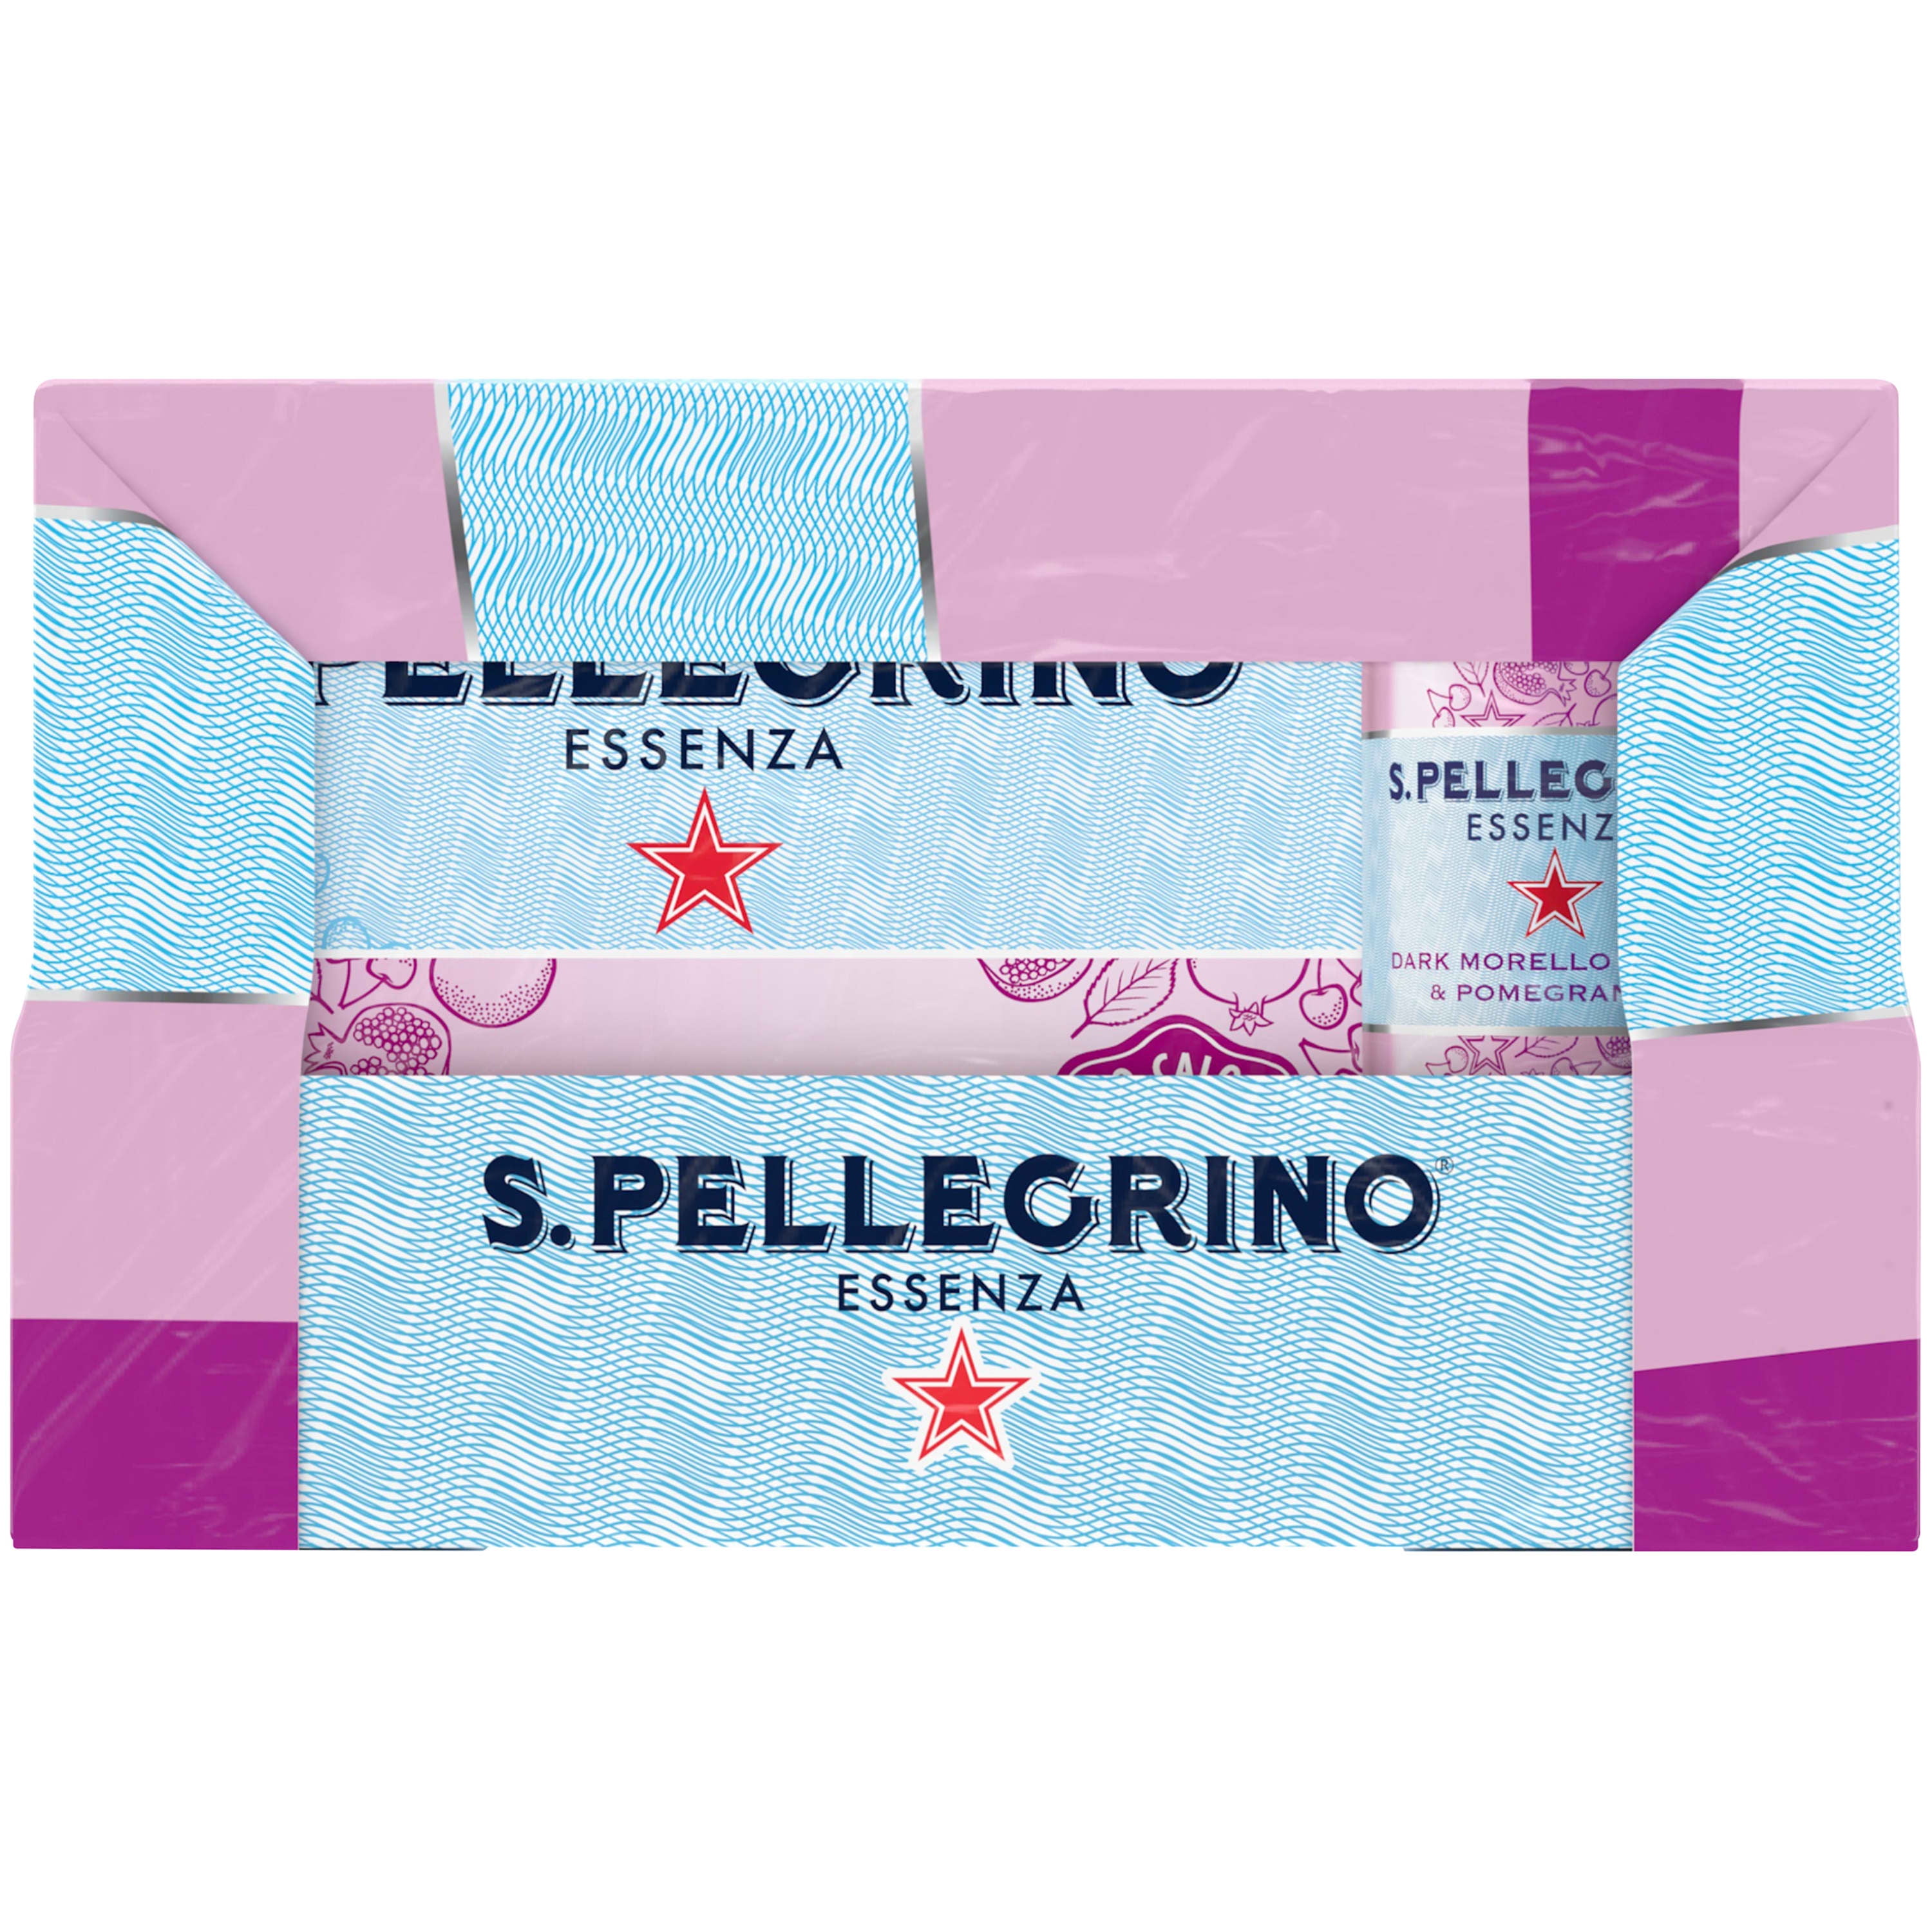 S.Pellegrino Essenza Dark Morello Cherry and Pomegranate Flavored Mineral Water with Natural CO2 Added, 267.6 fl oz - 1